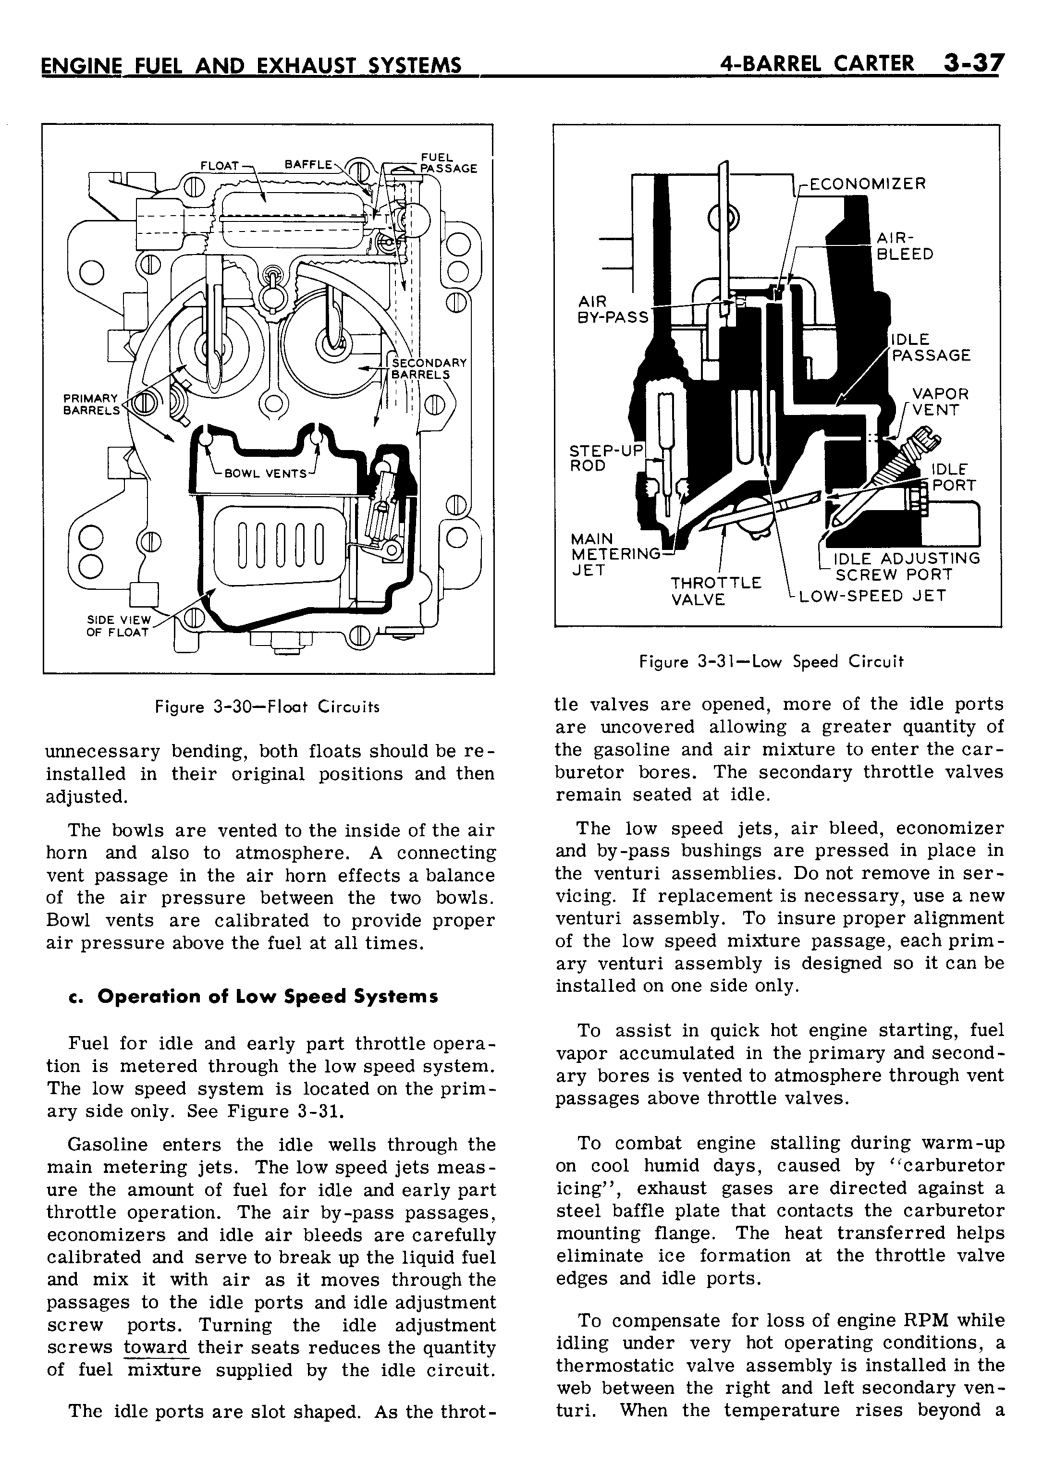 n_04 1961 Buick Shop Manual - Engine Fuel & Exhaust-037-037.jpg